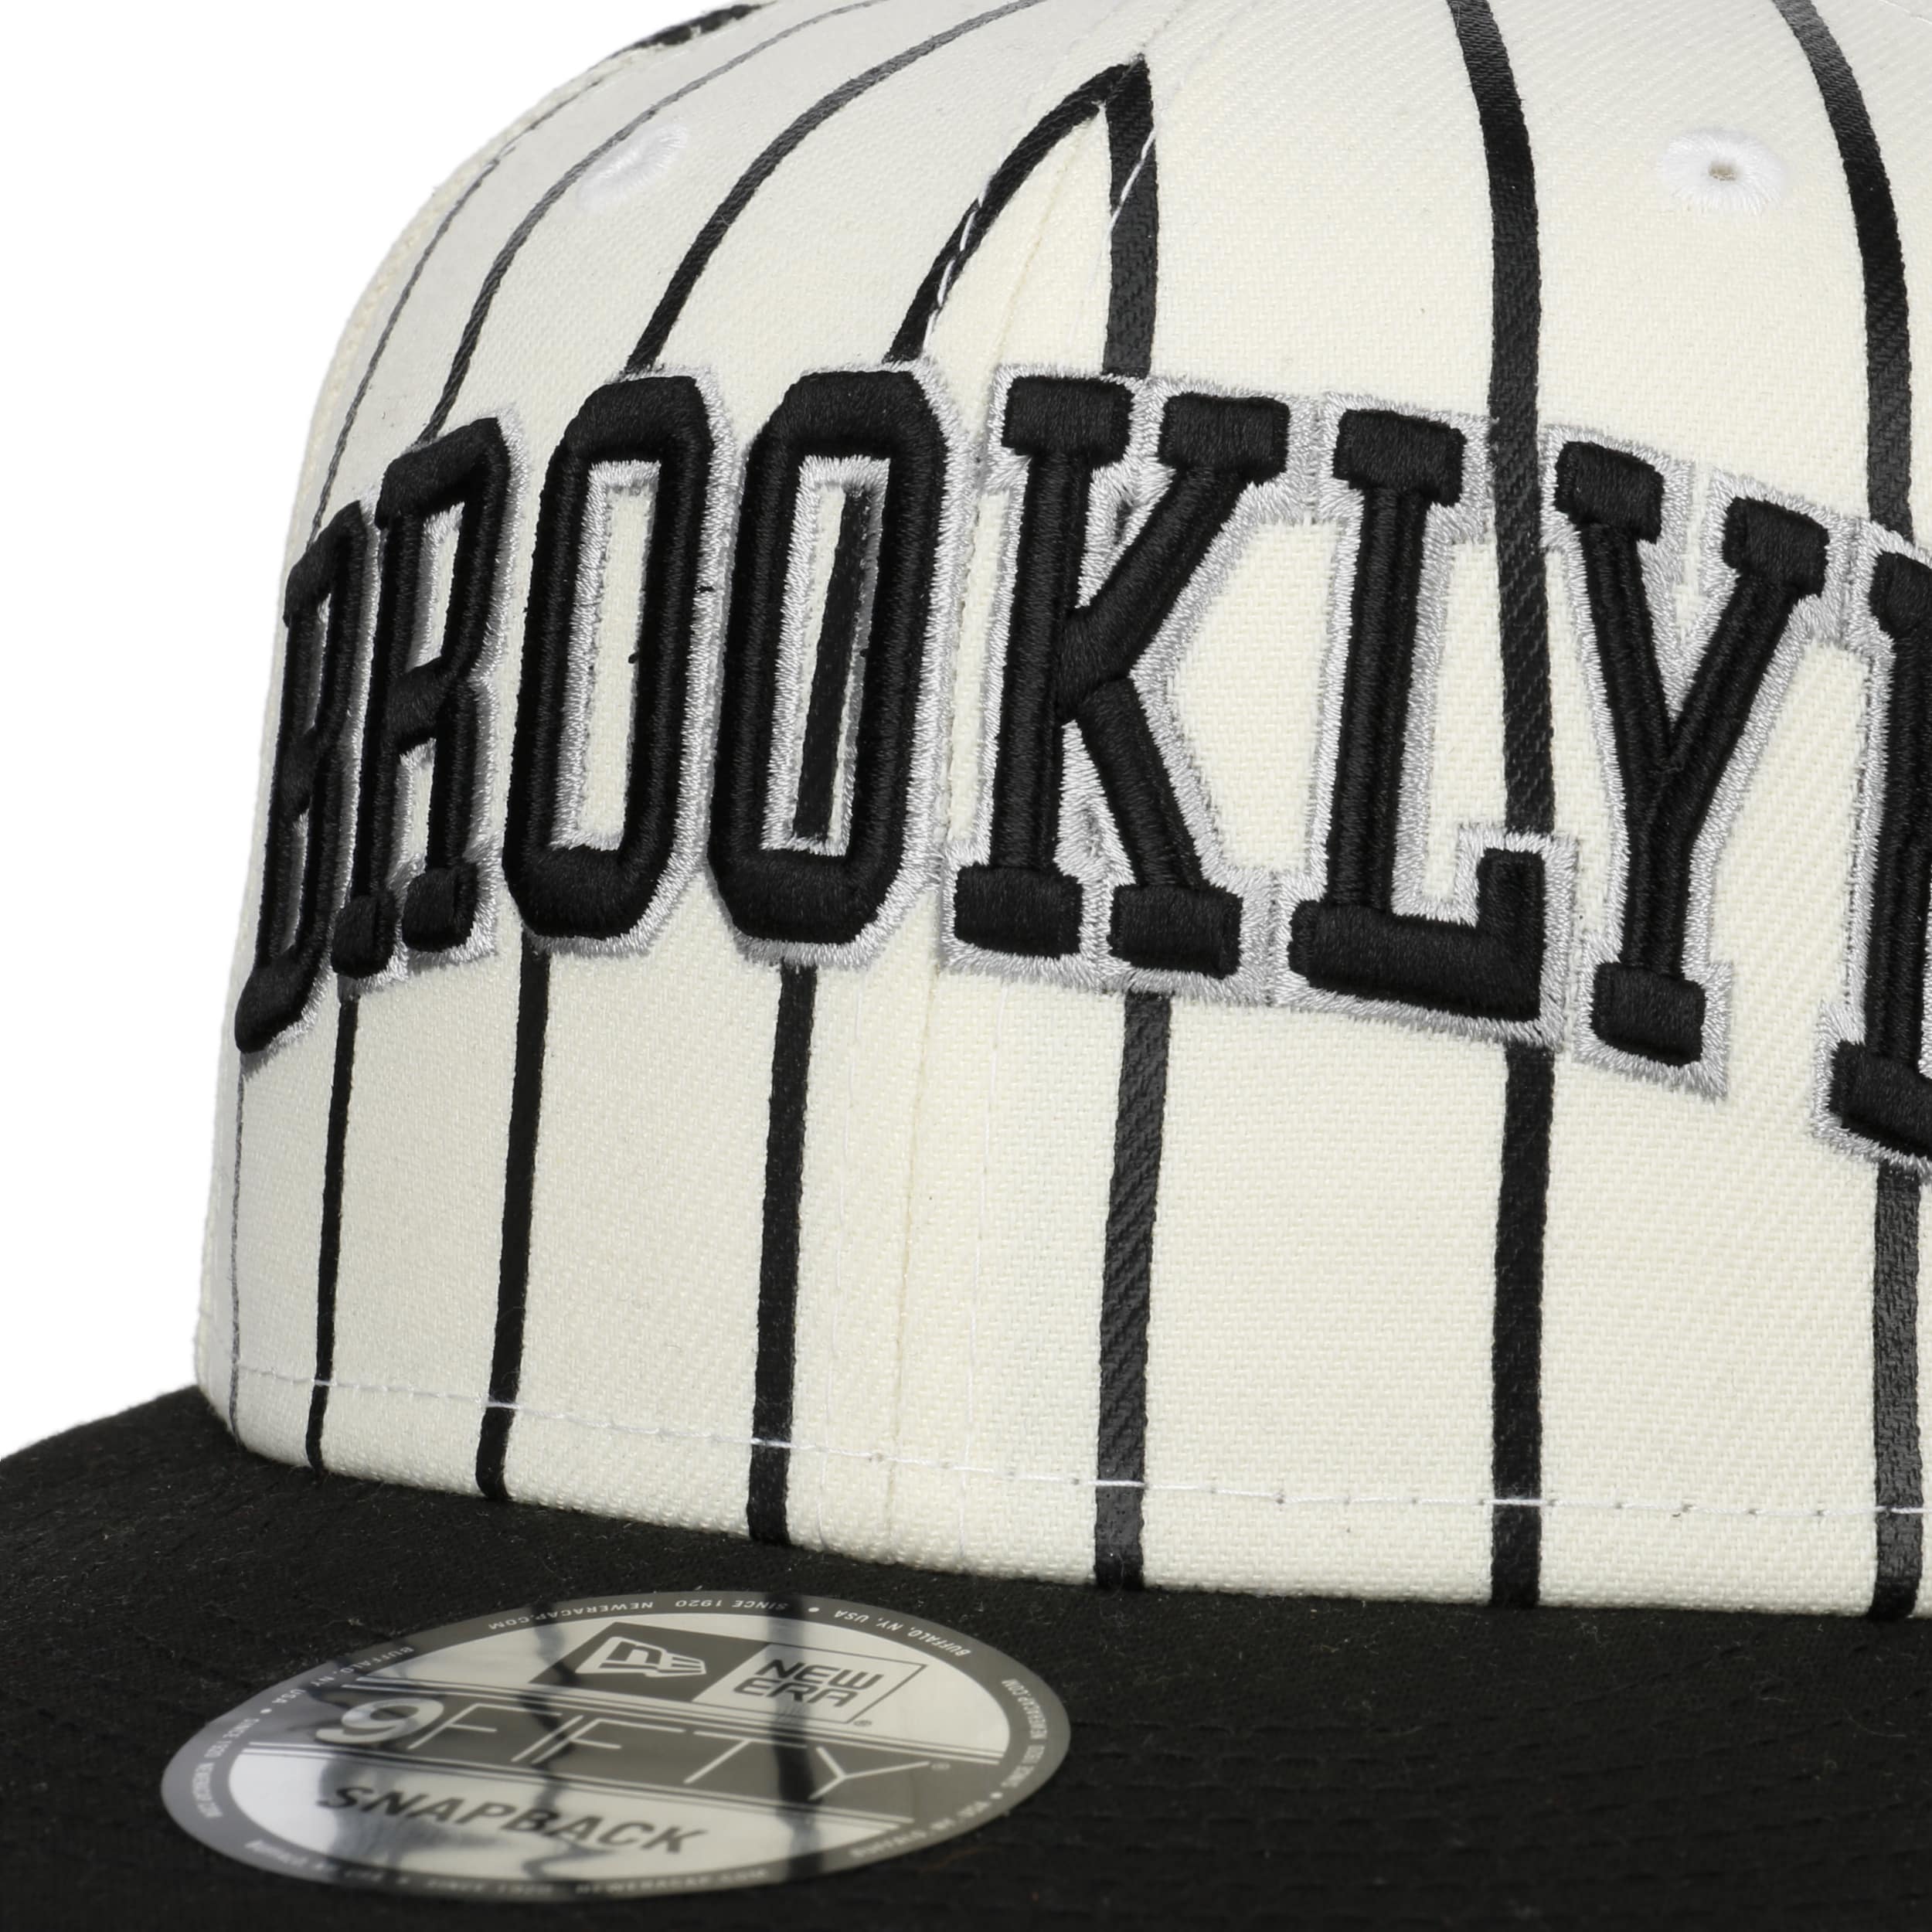 brooklyn nets leather hat